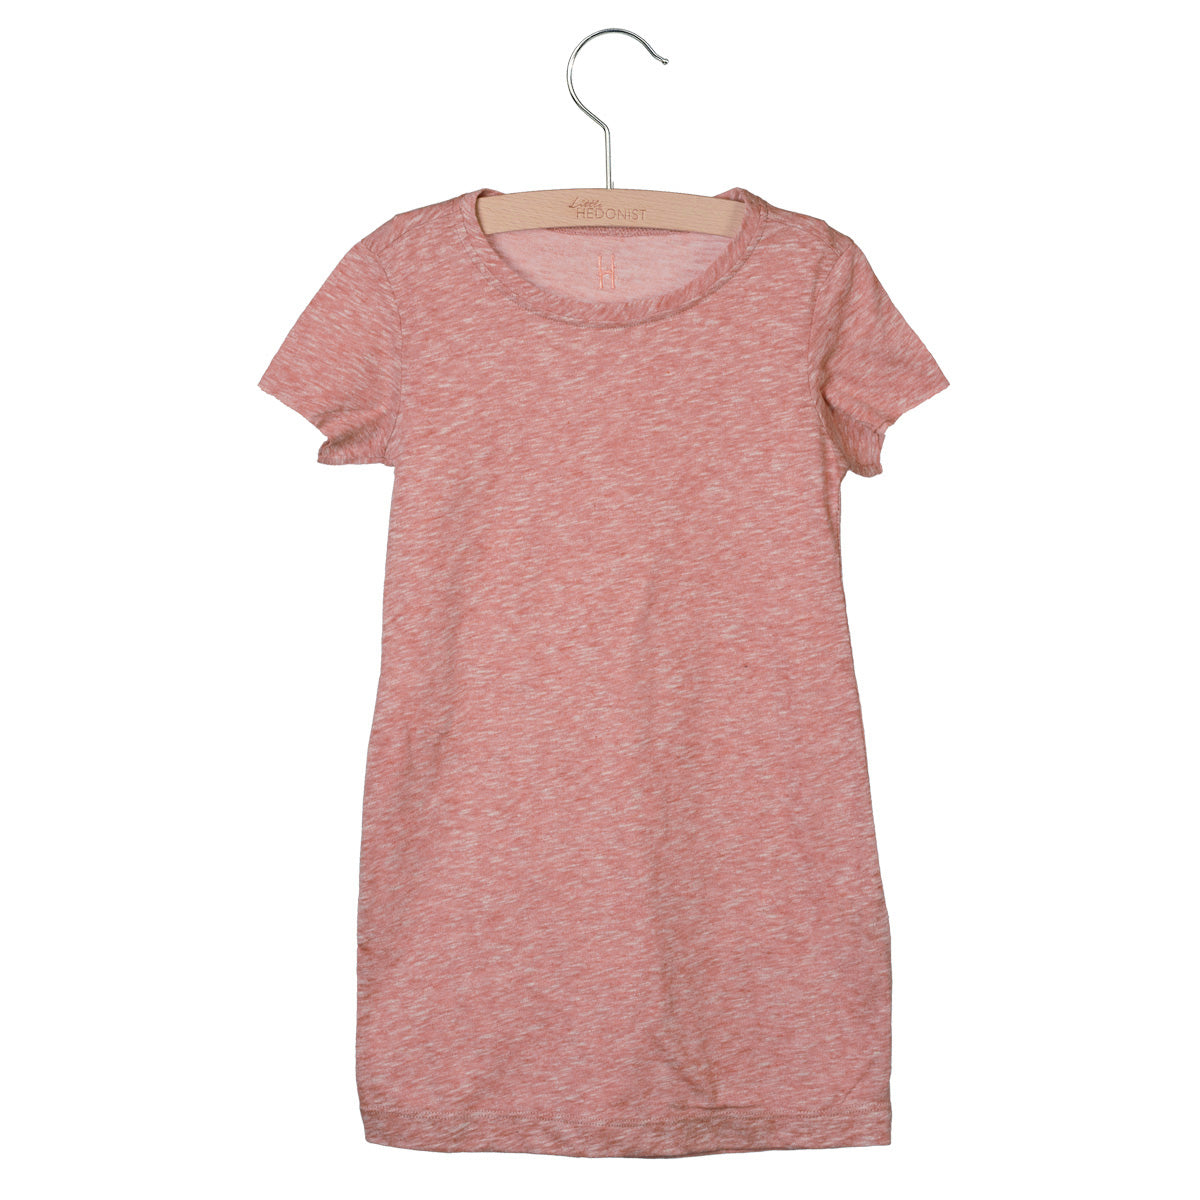 LITTLE HEDONIST - Robe t-shirt rose neuve - 2 ans